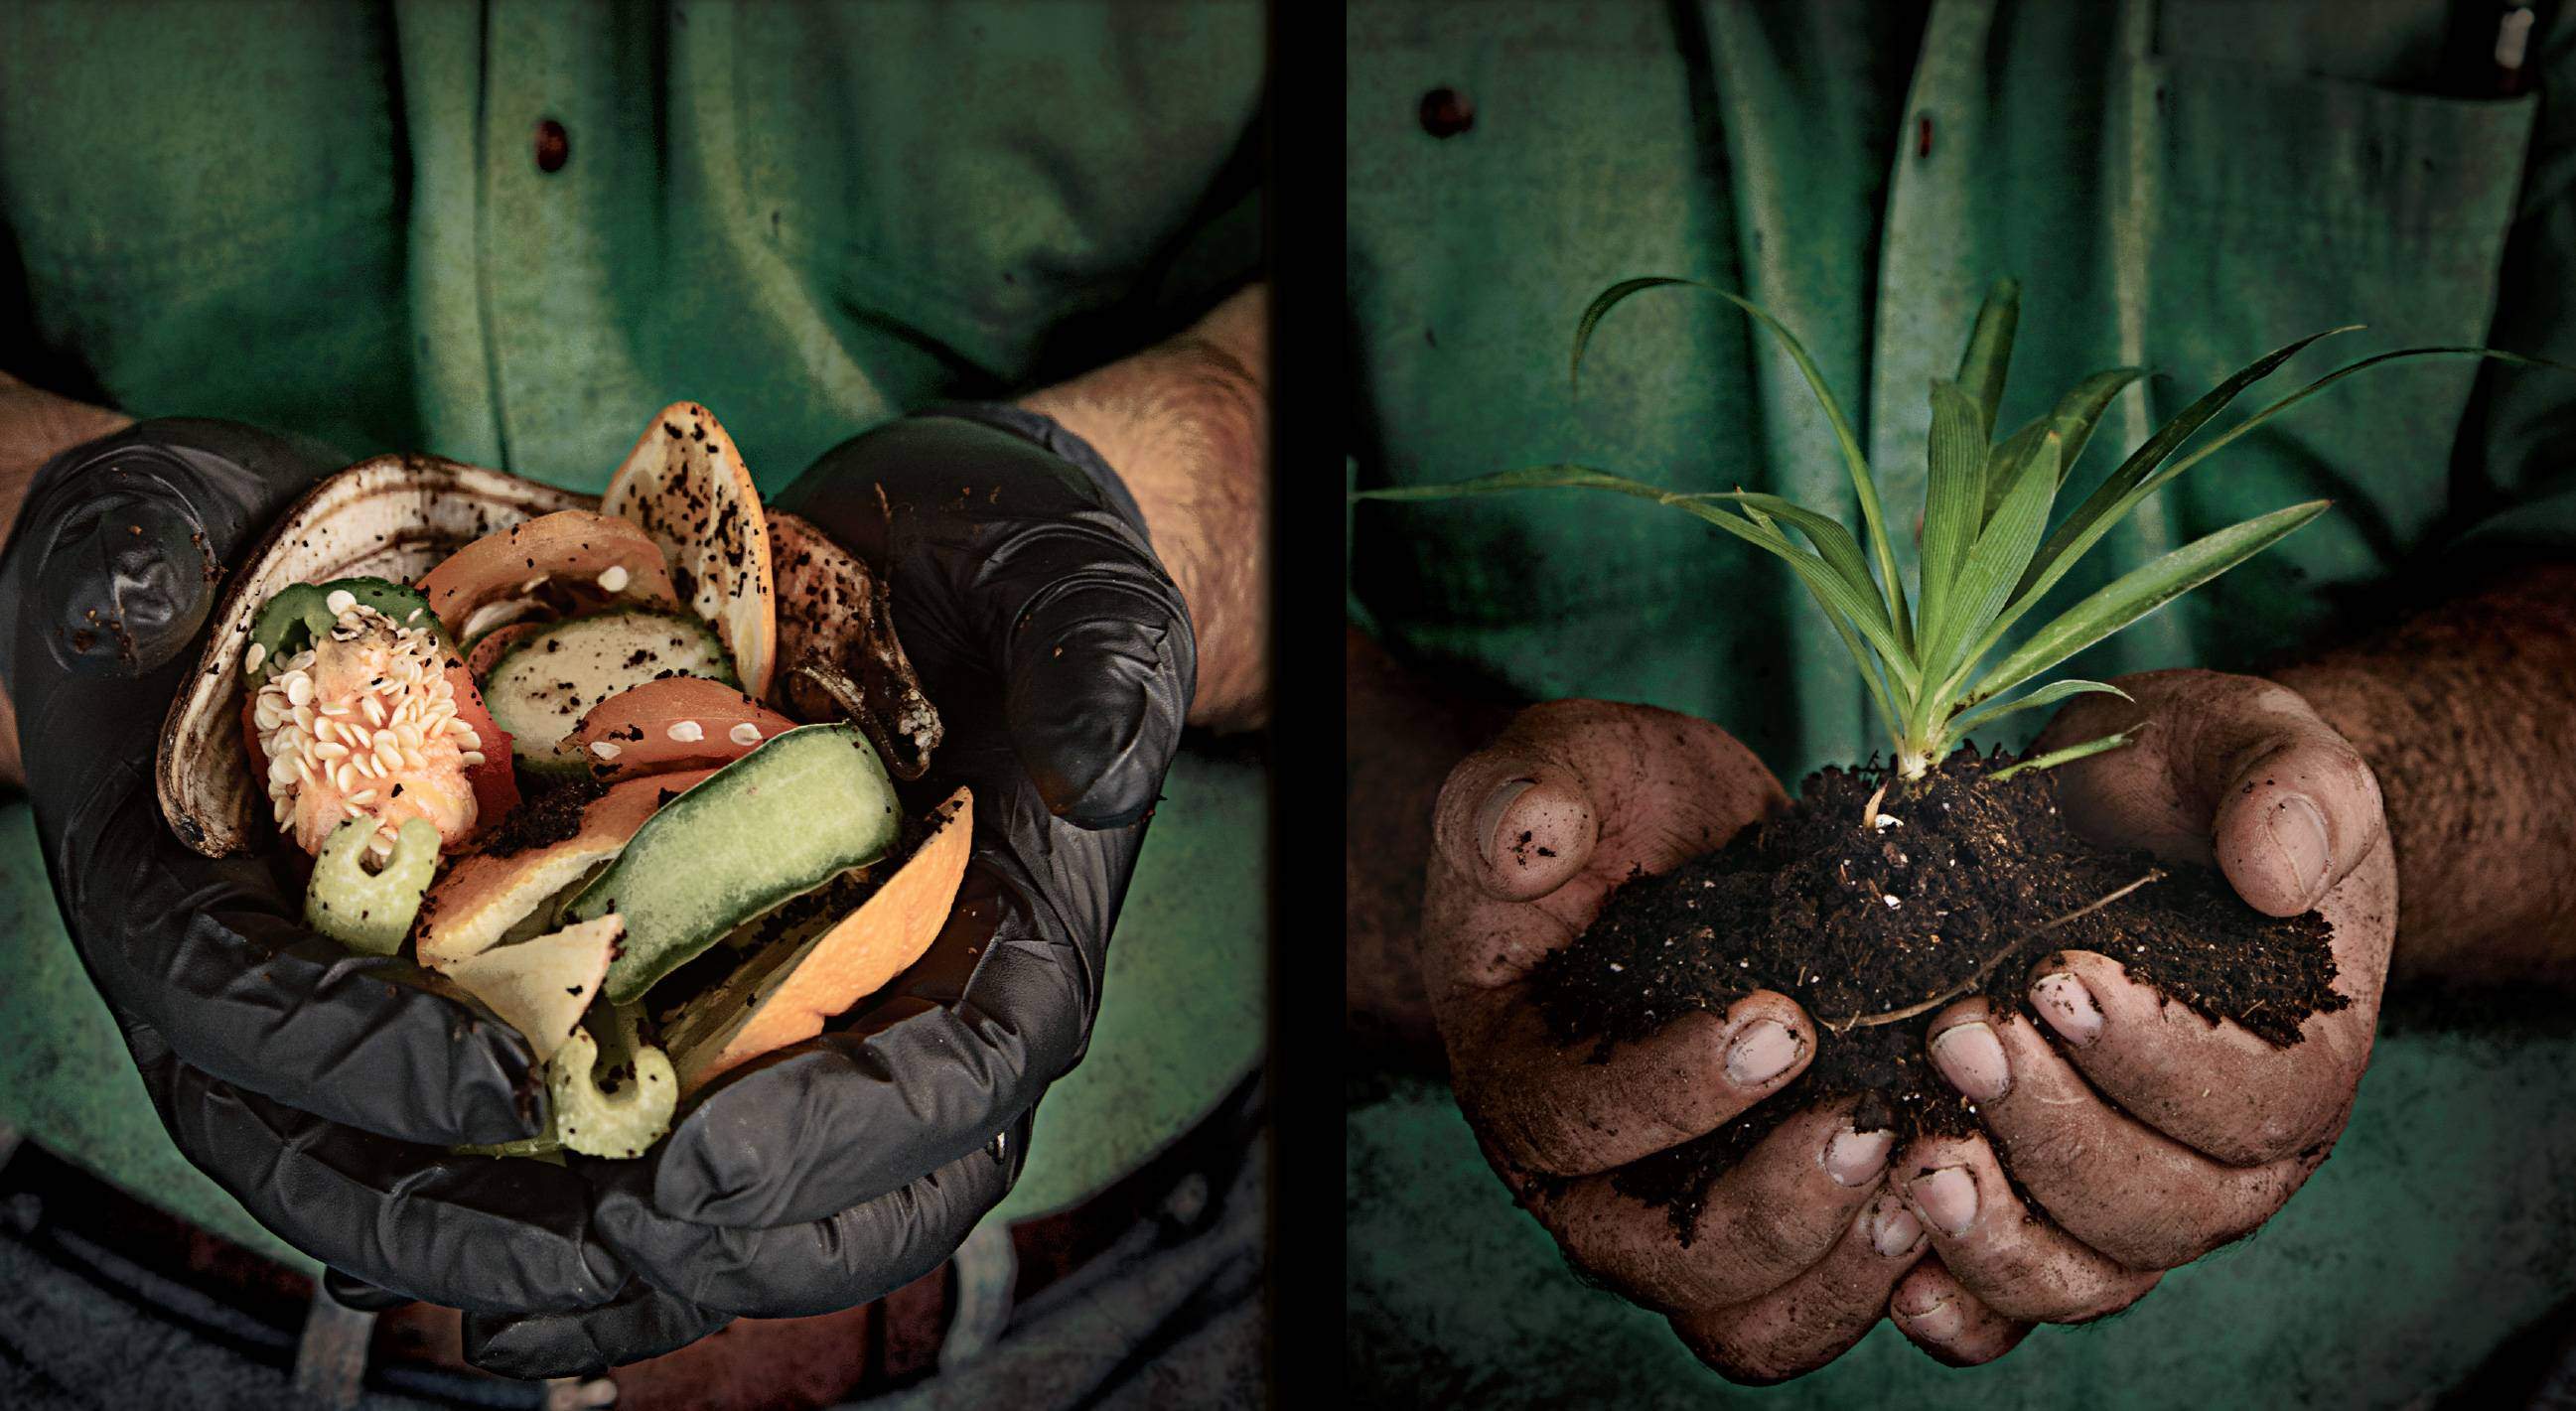 hands holding vegetable waste and hands holding composting dirt